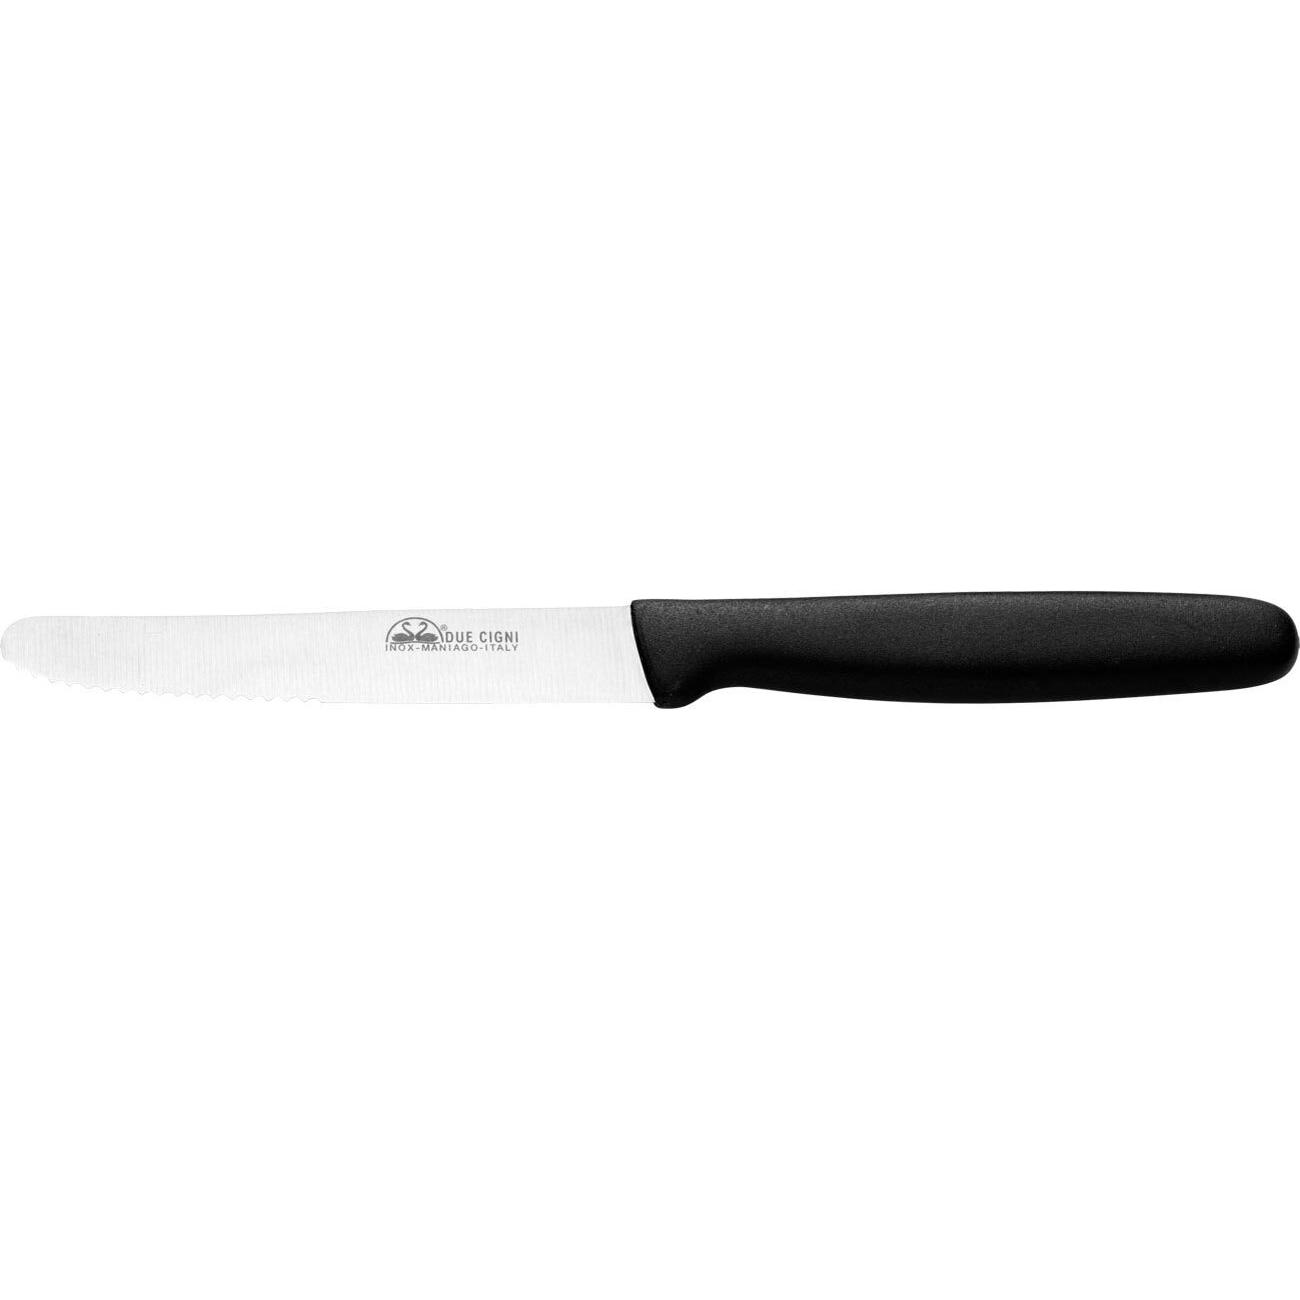 Нож кухонный Due Cigni Table Combo 110 мм. Цвет - черный 2C 711/11D 1904.00.68